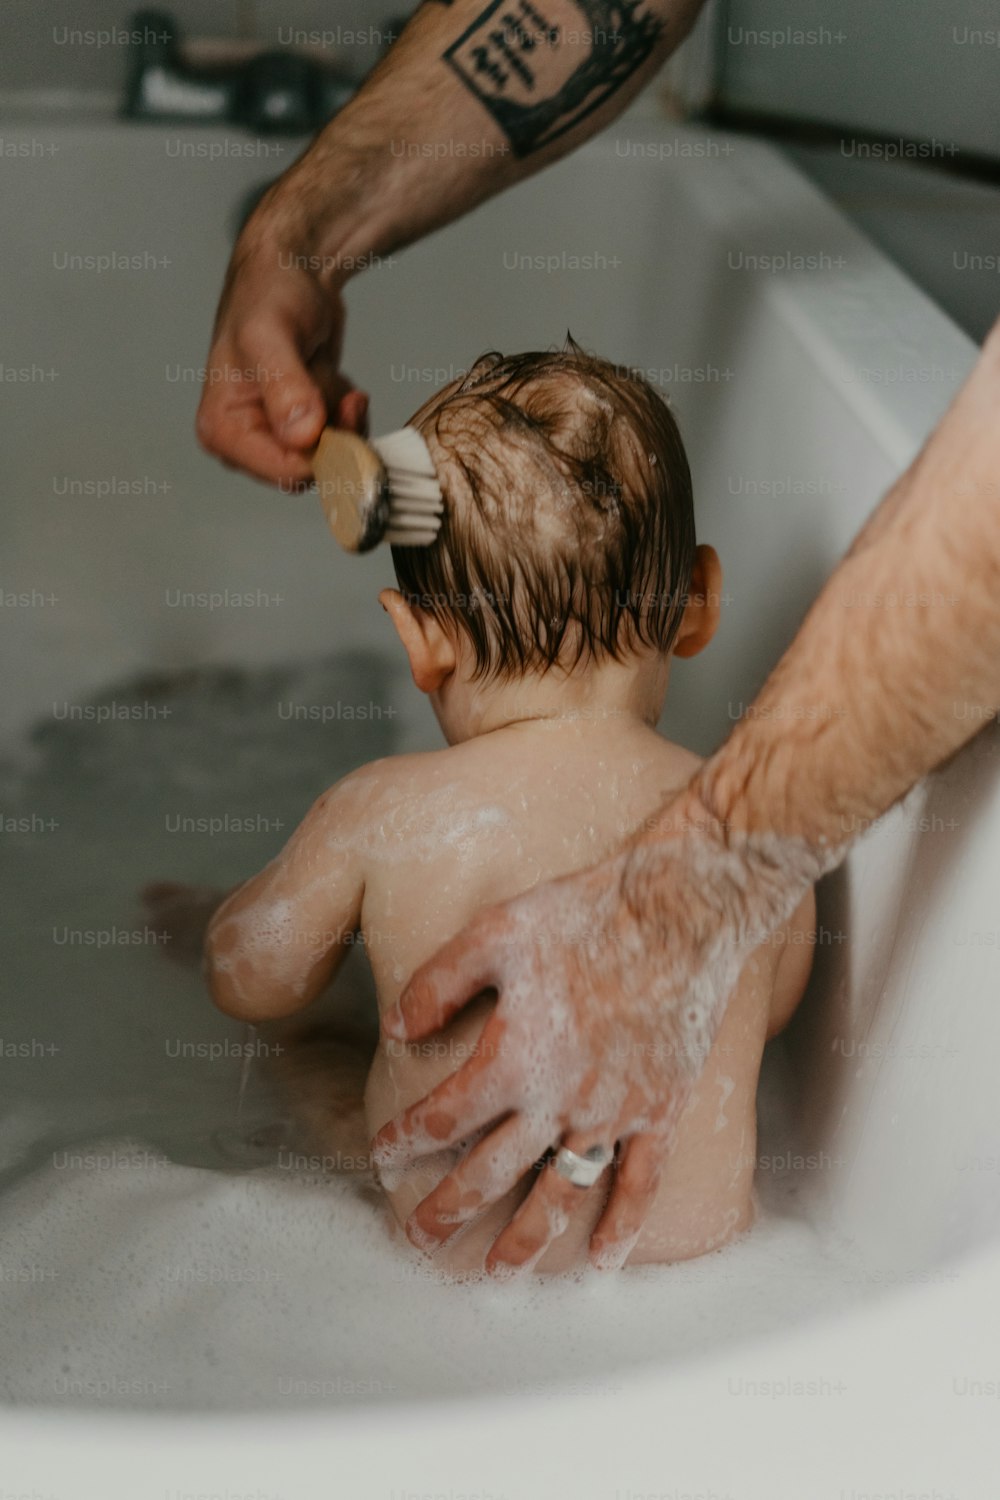 a man brushing a child's hair in a bathtub